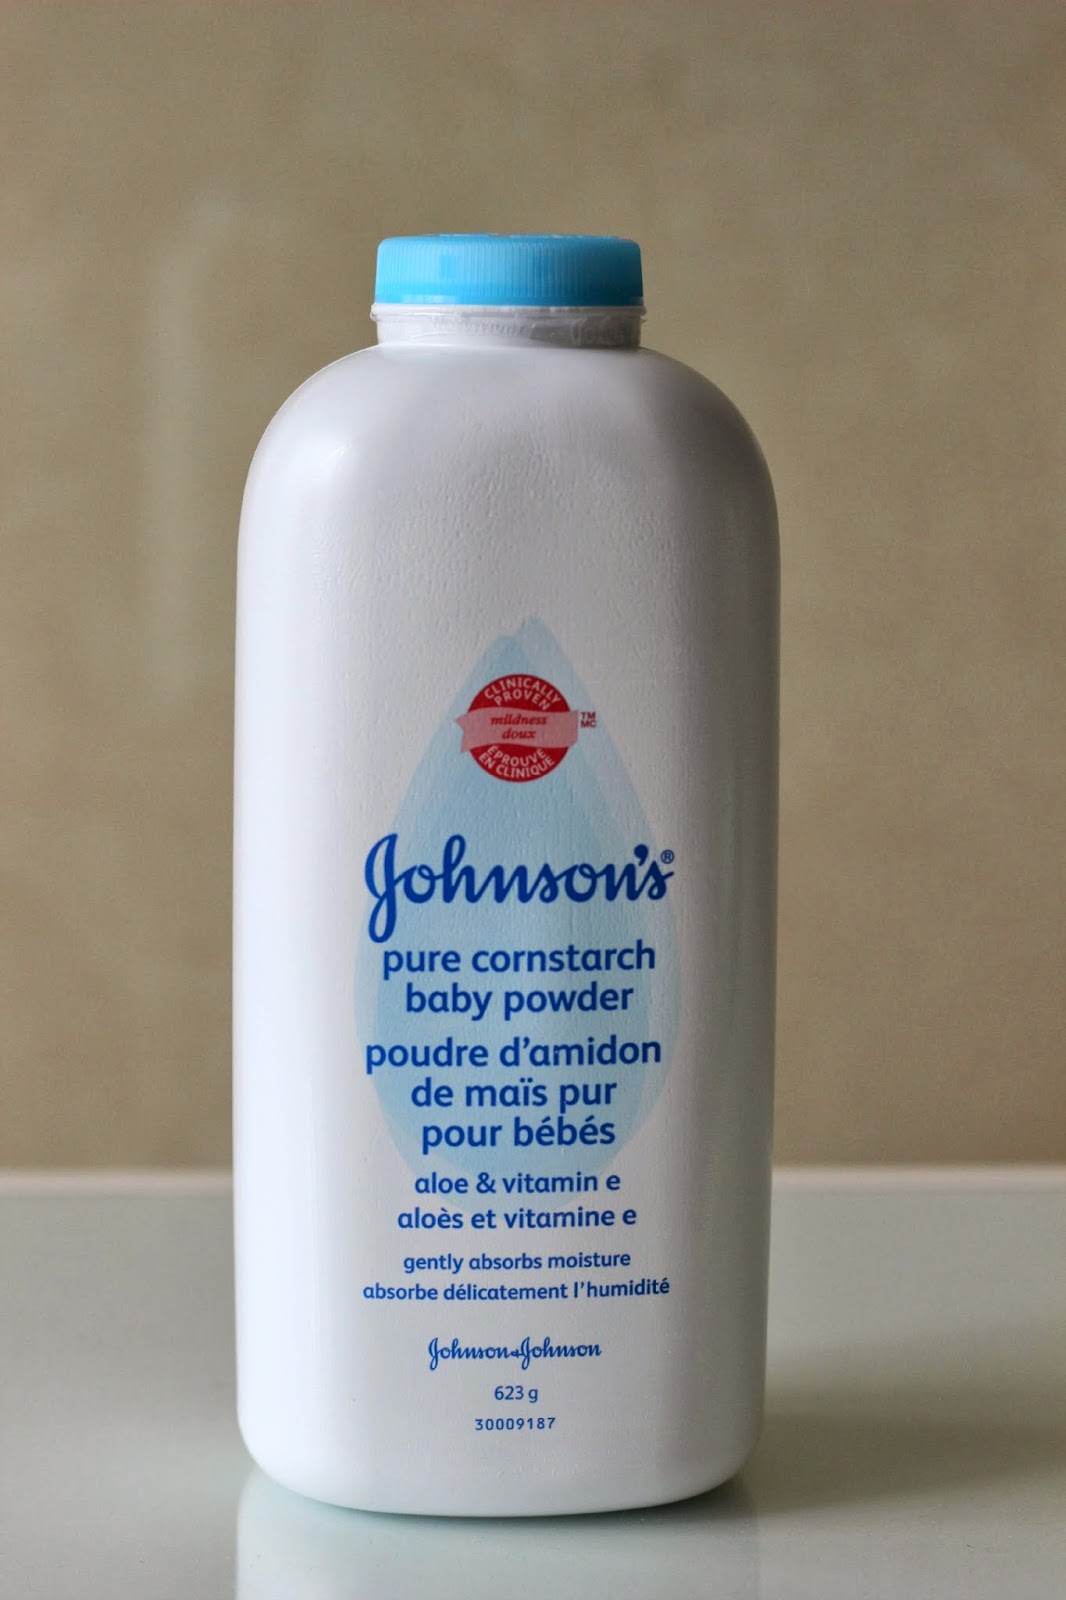 My All-Natural Dry Shampoo: Johnson's Pure Cornstarch Baby Powder | Loves Beauty